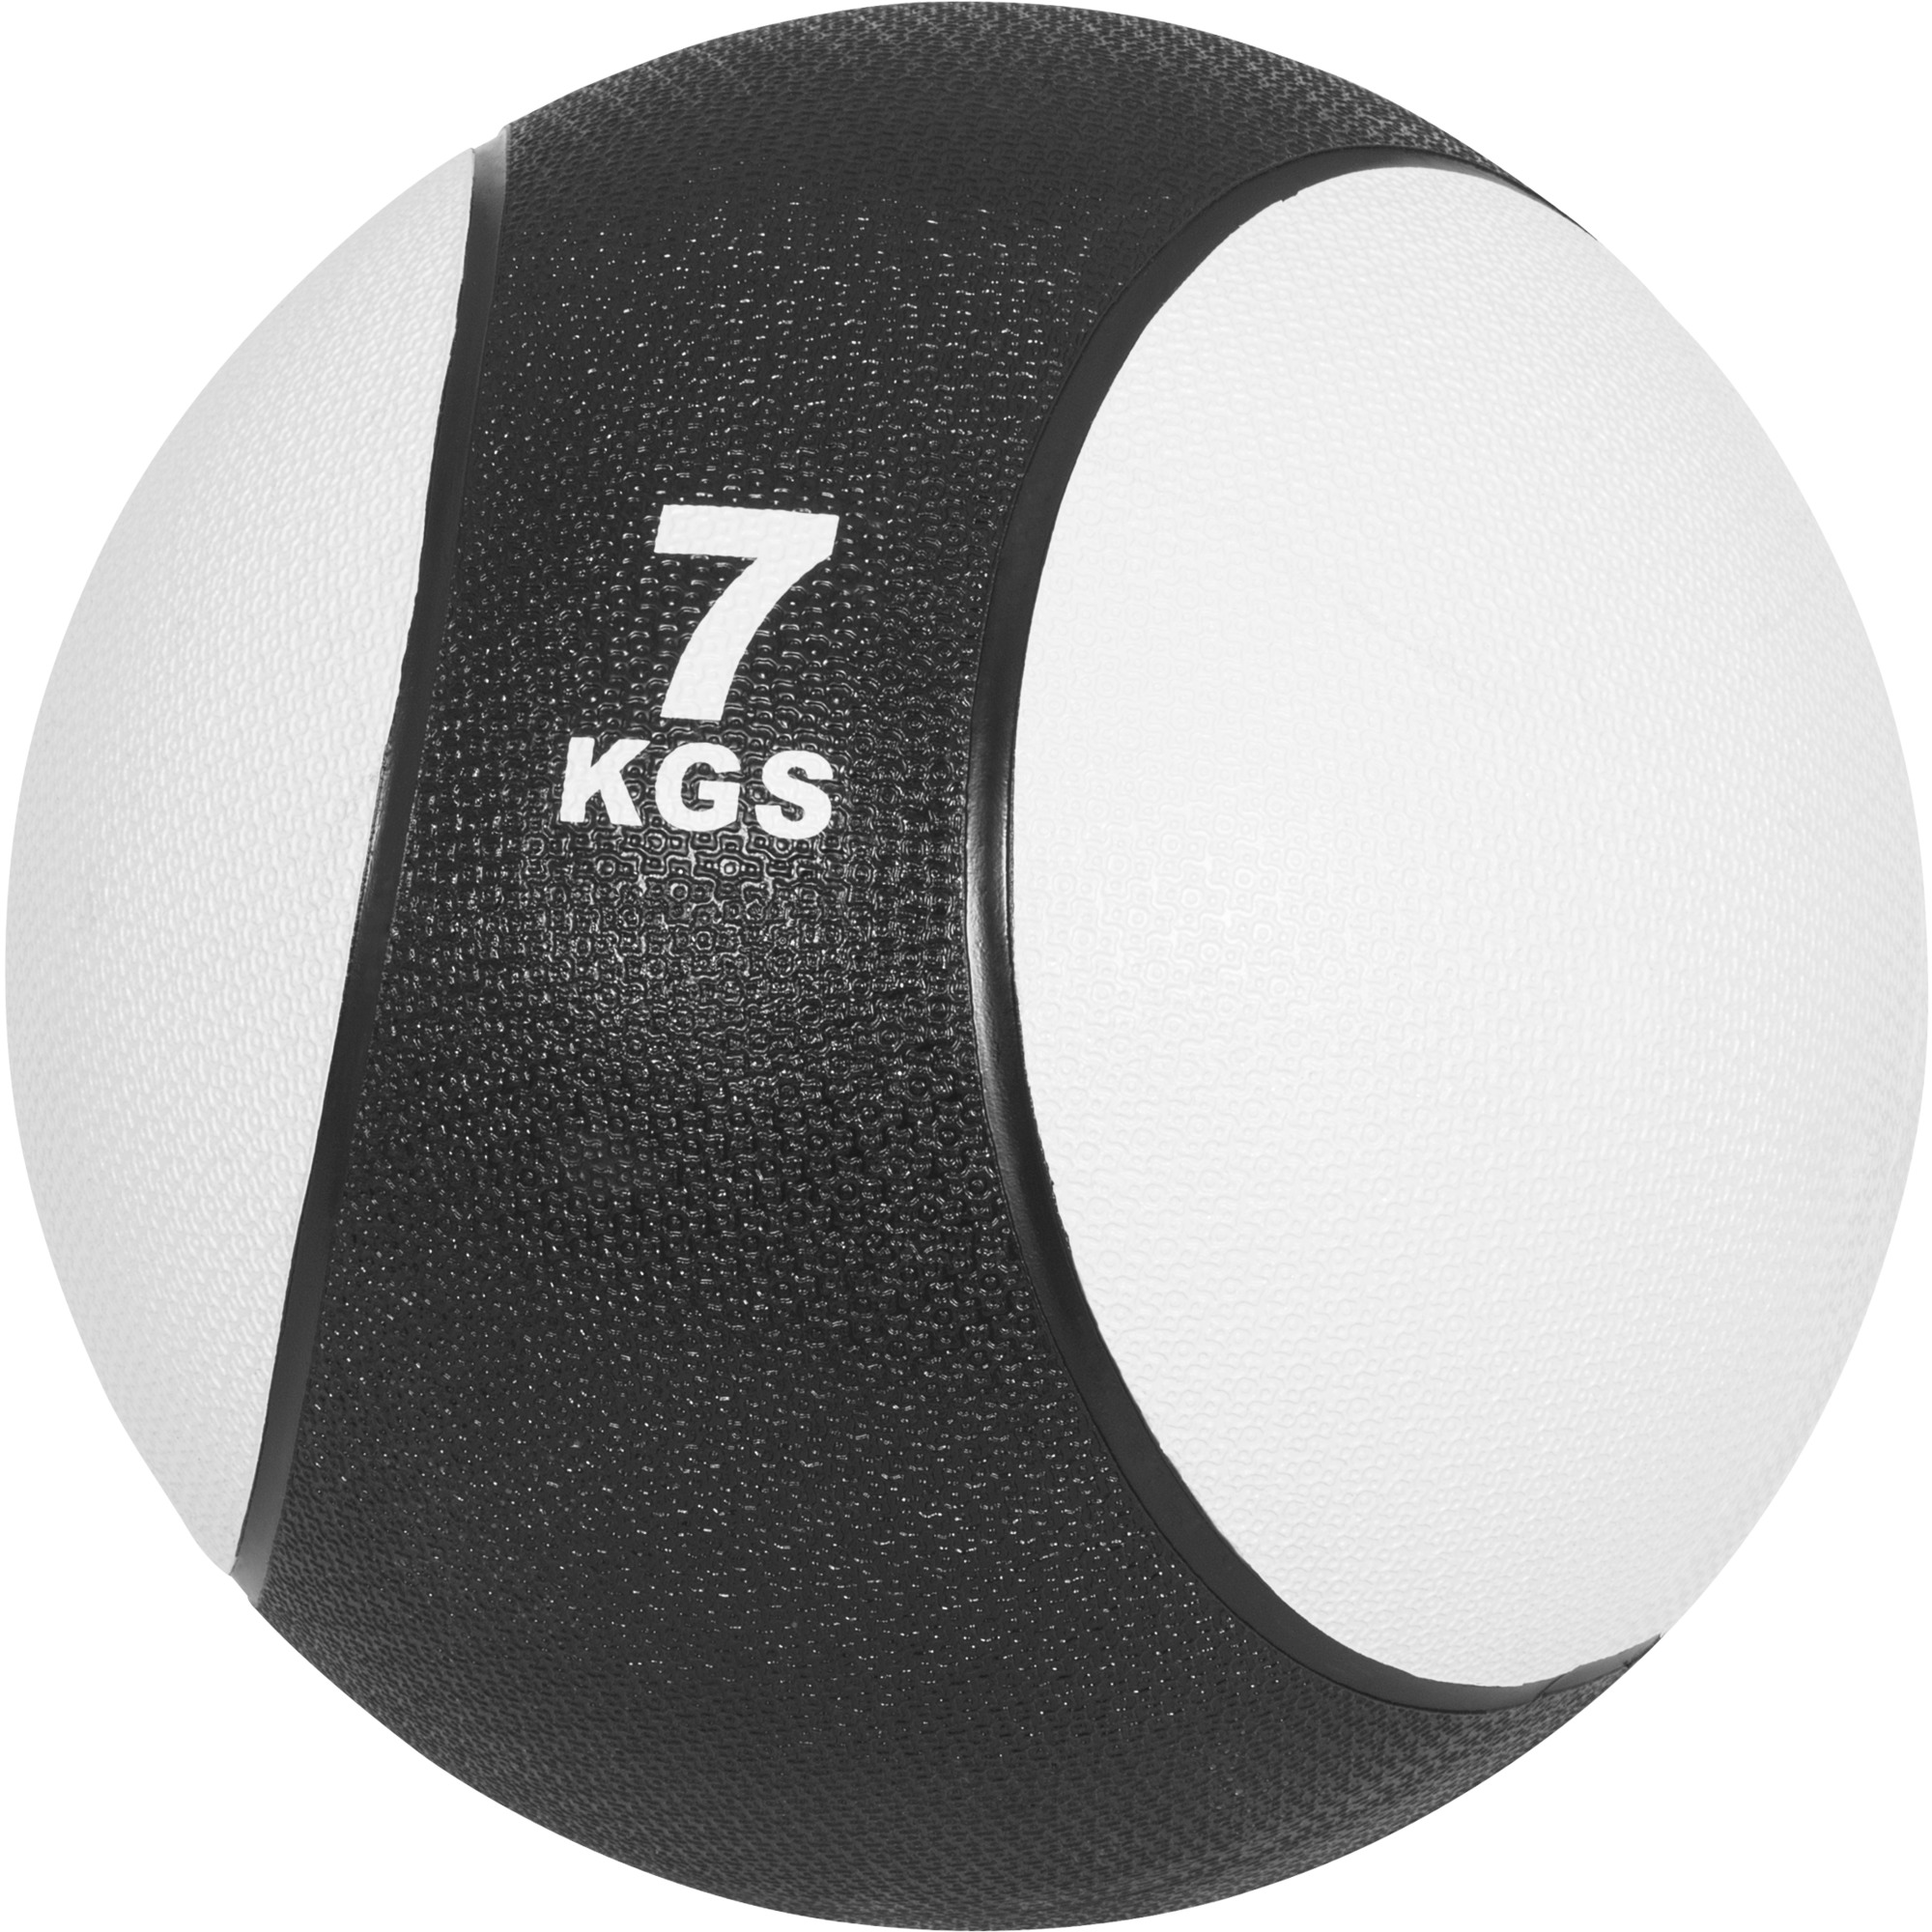 MÃ©decine ball de 7 KG - blanc/noir - ballon de musculation